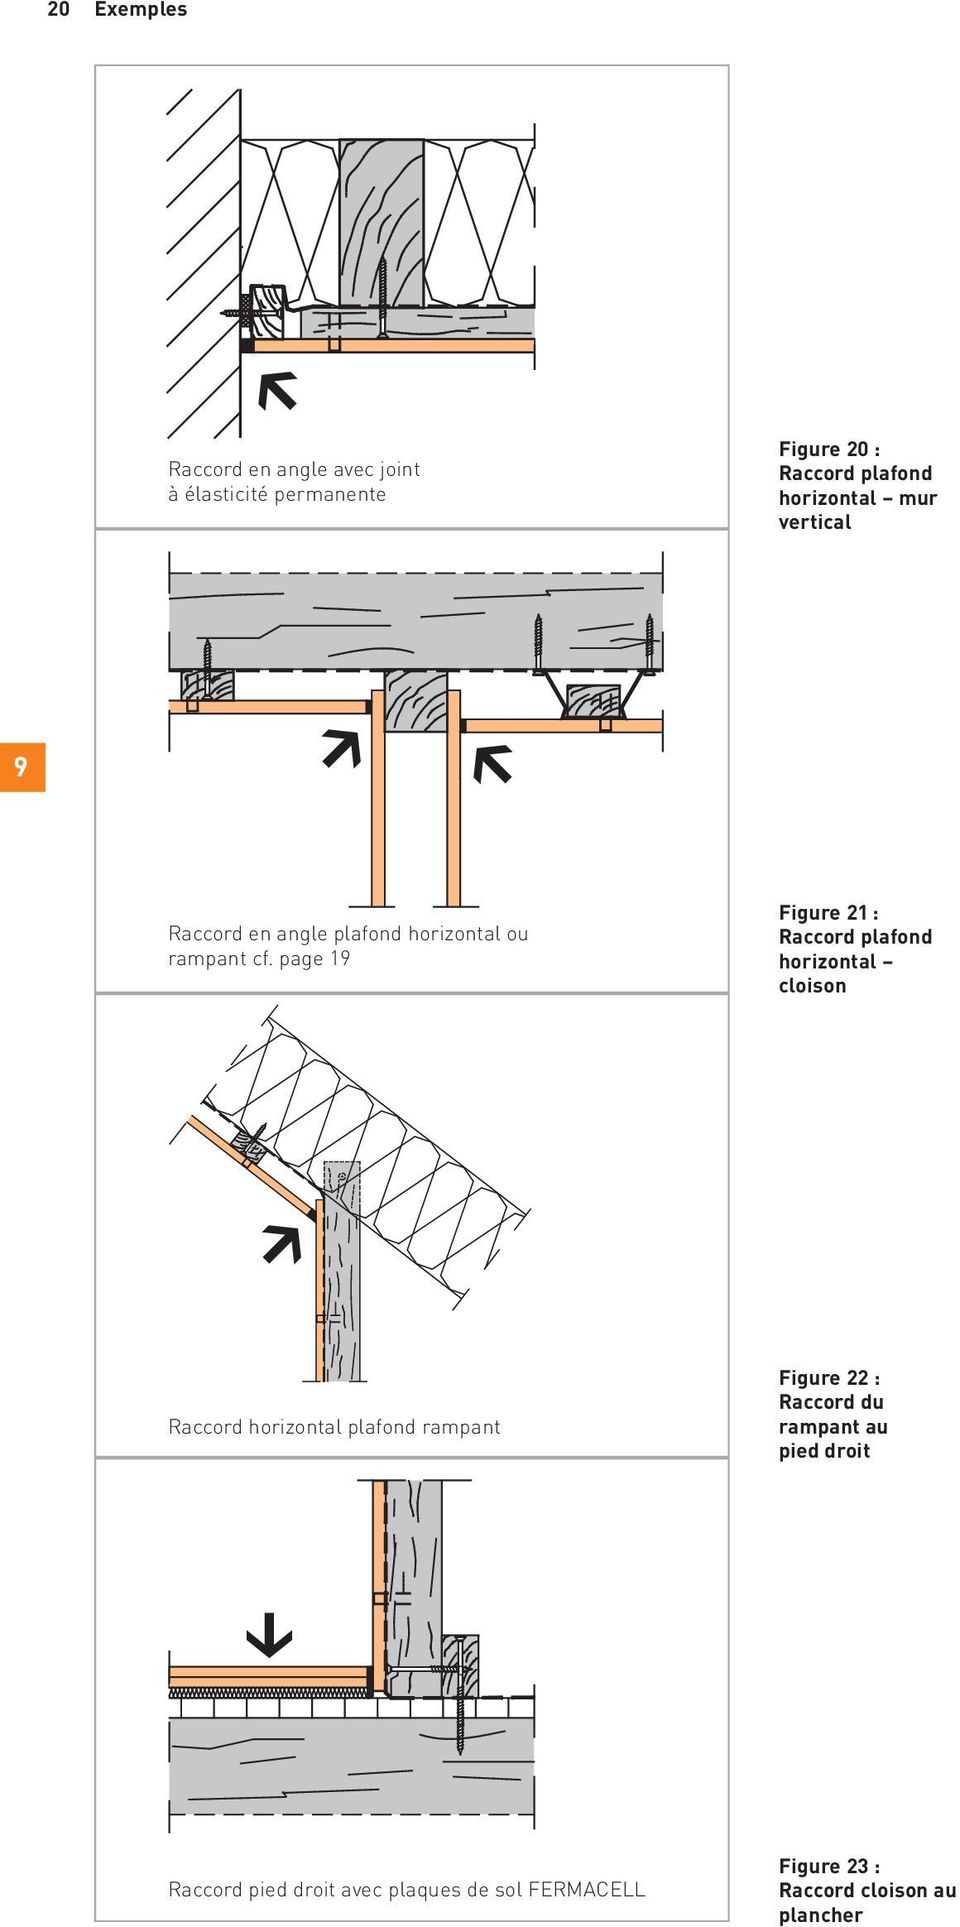 page 19 Figure 21 : Raccord plafond horizontal cloison u Raccord horizontal plafond rampant Figure